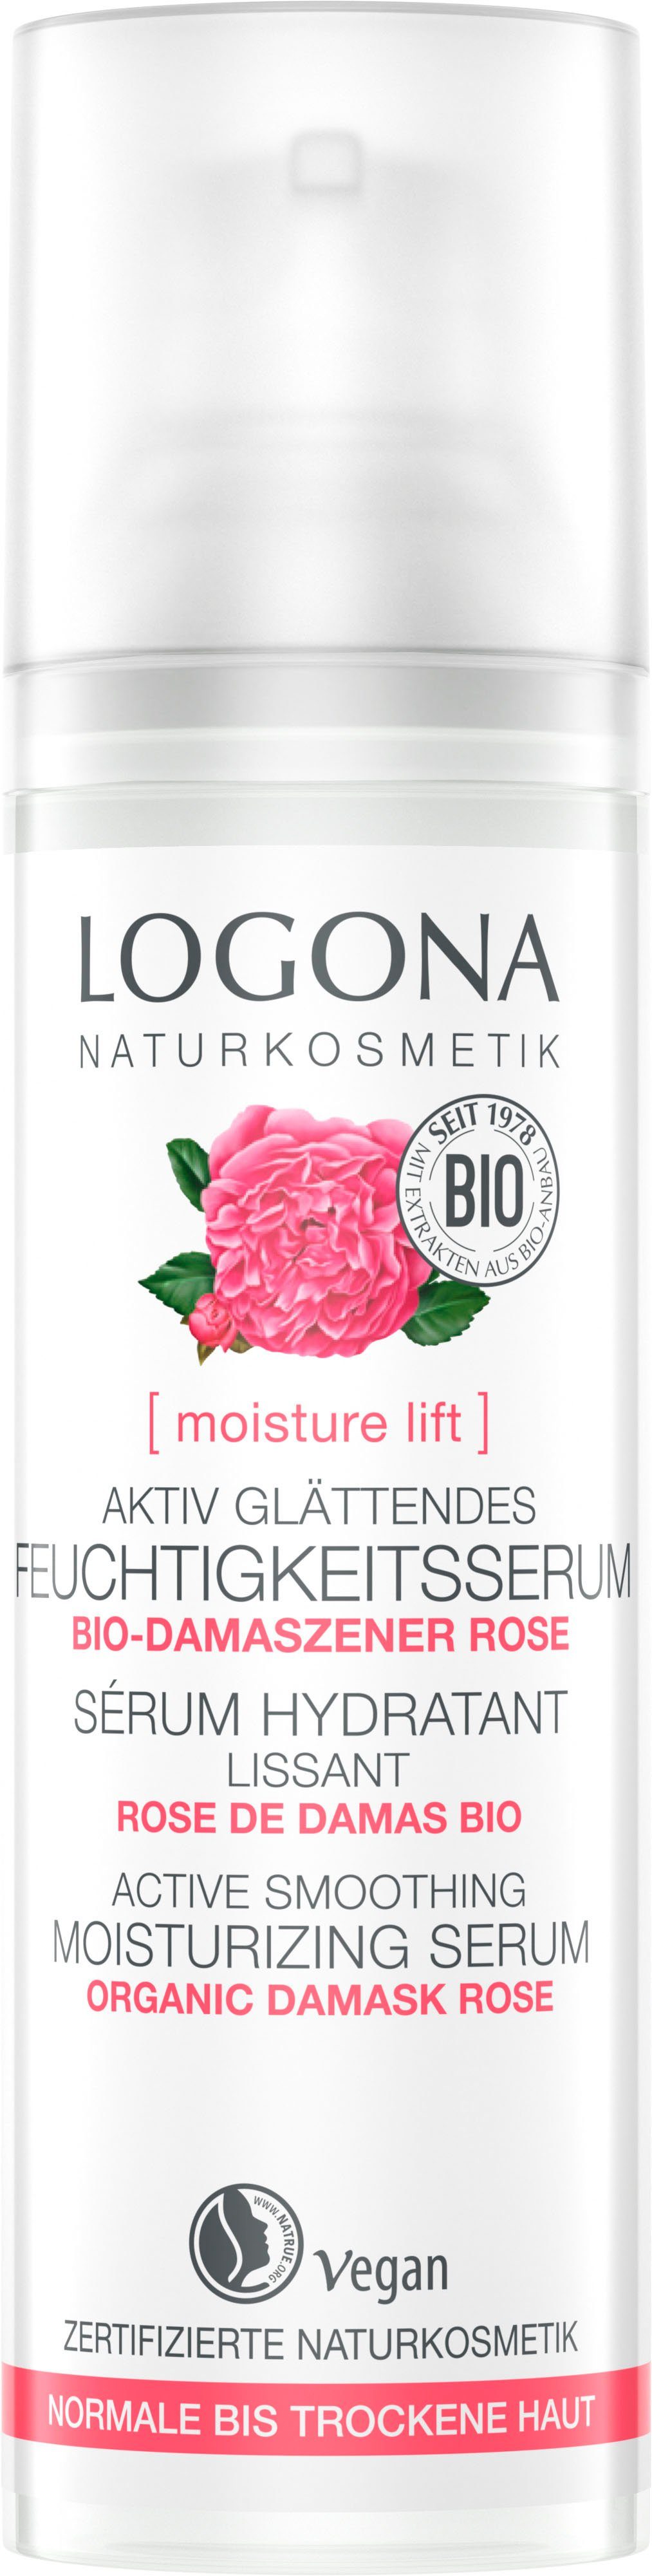 Perfekte Qualität! LOGONA Gesichtsserum Logona moisture lift glätt Feuchtigk.serum